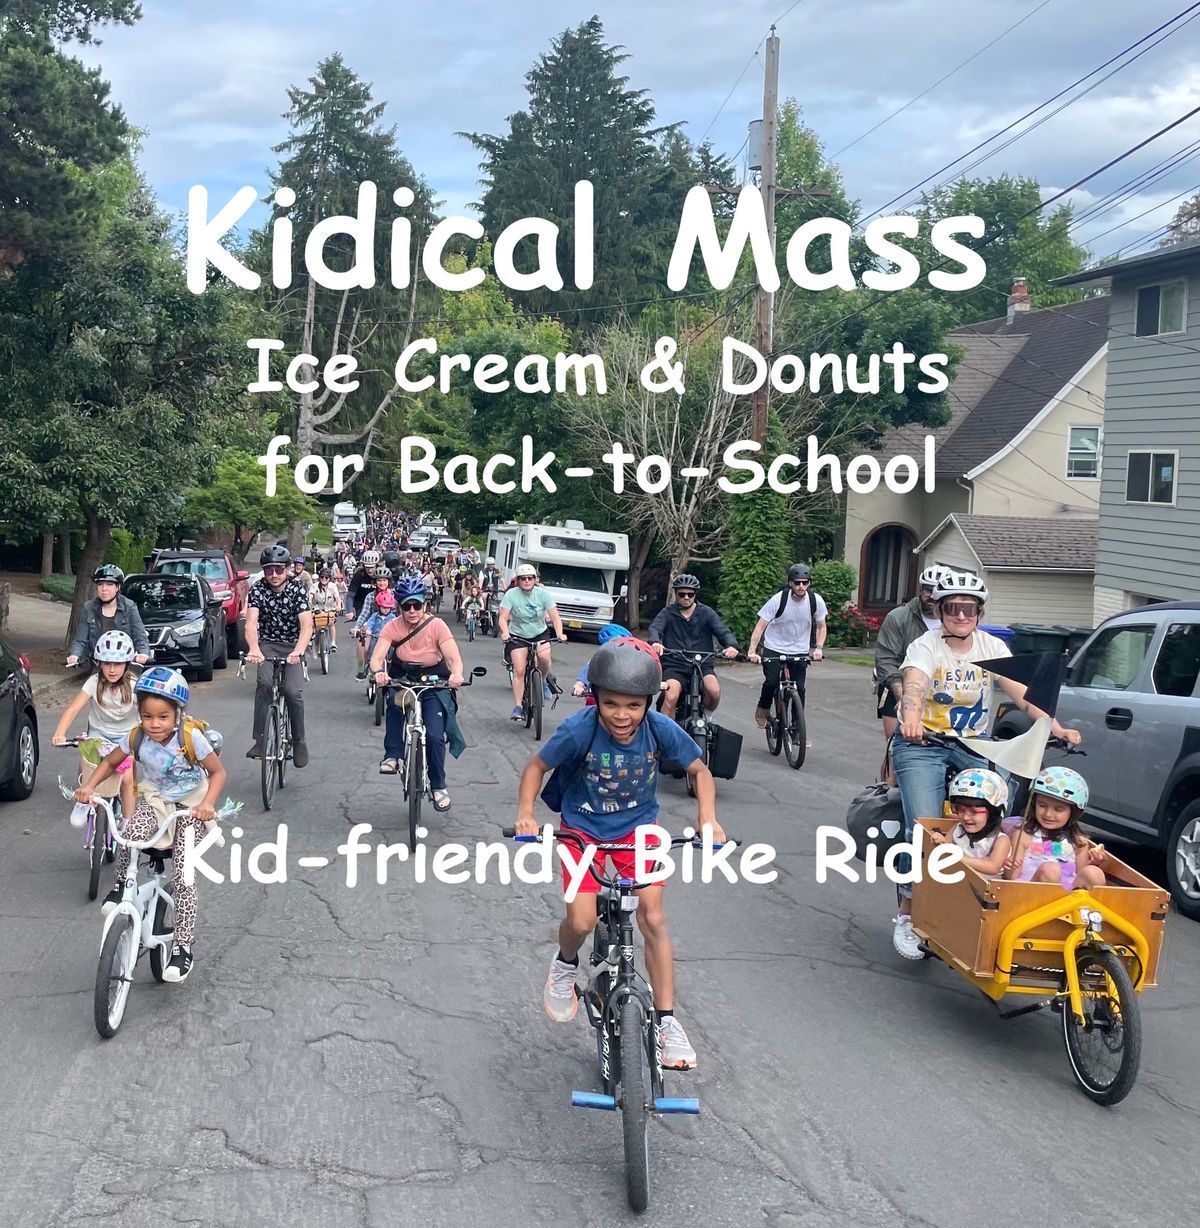 Kid-friendly Bike Ride to Ice Cream & Donuts - Kidical Mass